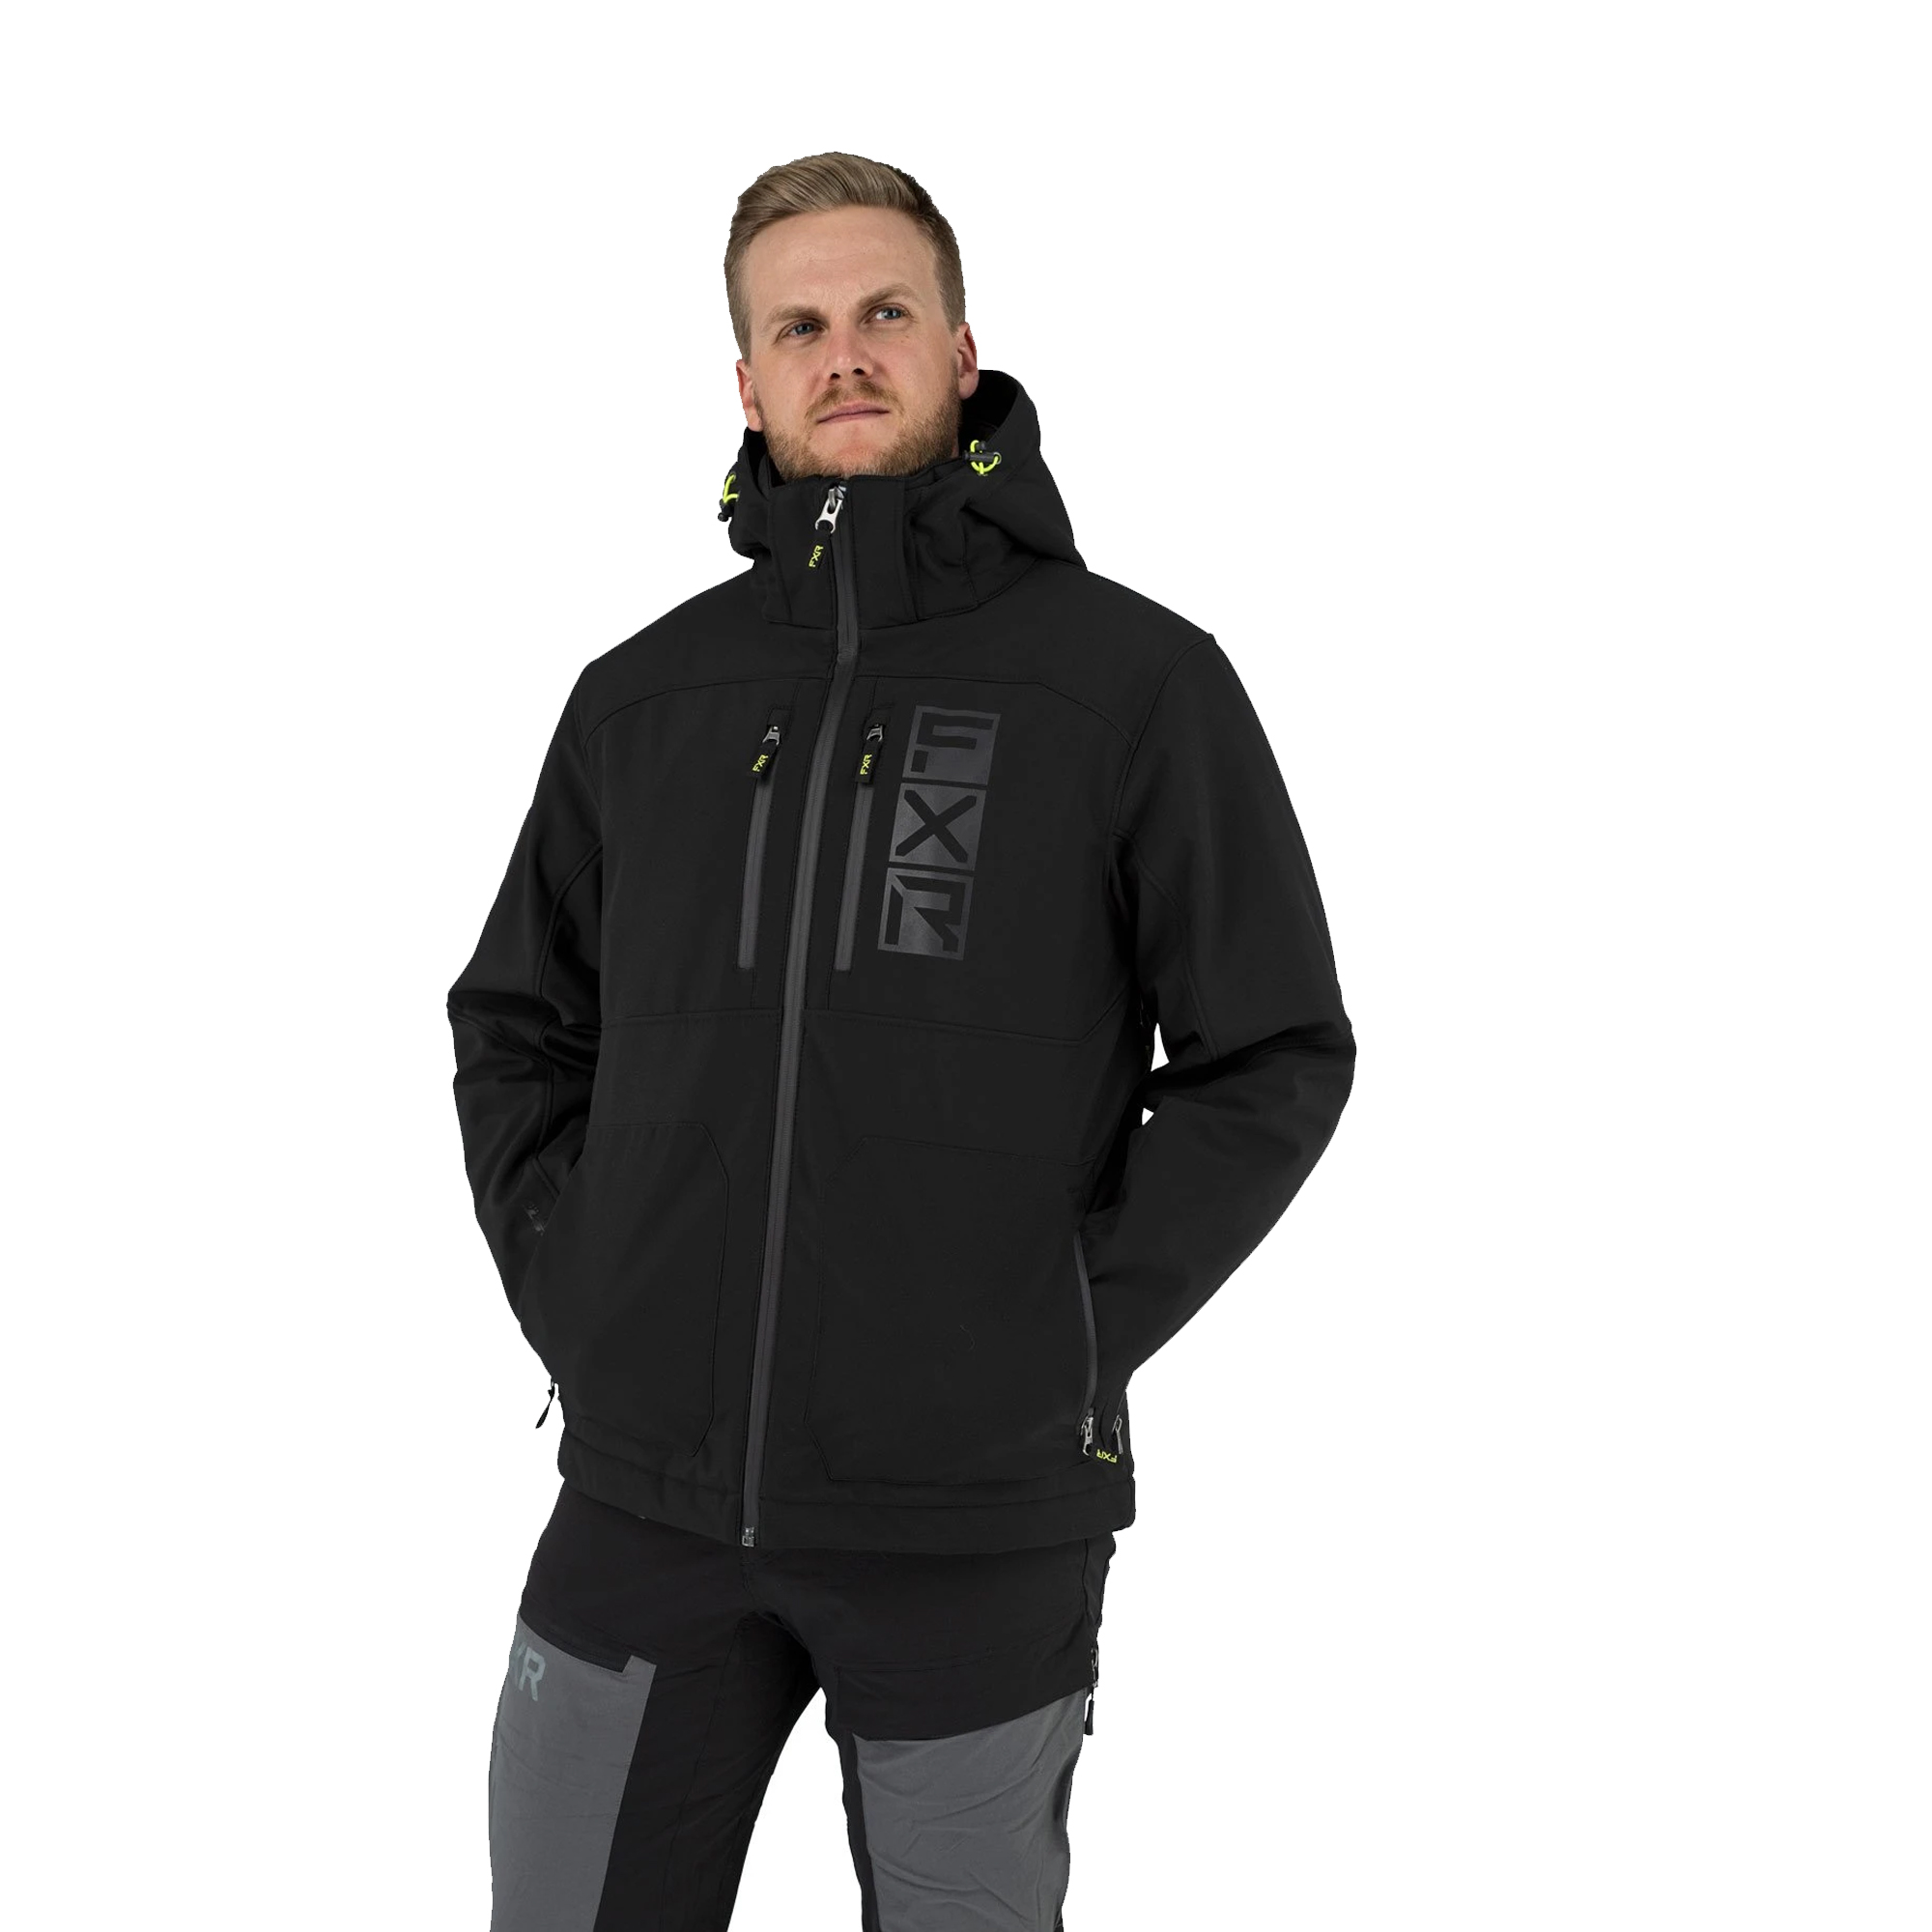 FXR  Black Hi-Vis Vertical Pro Insulated Softshell Jacket Warm Fleece Interior - XX-Large 210909-1065-19 - image 1 of 2